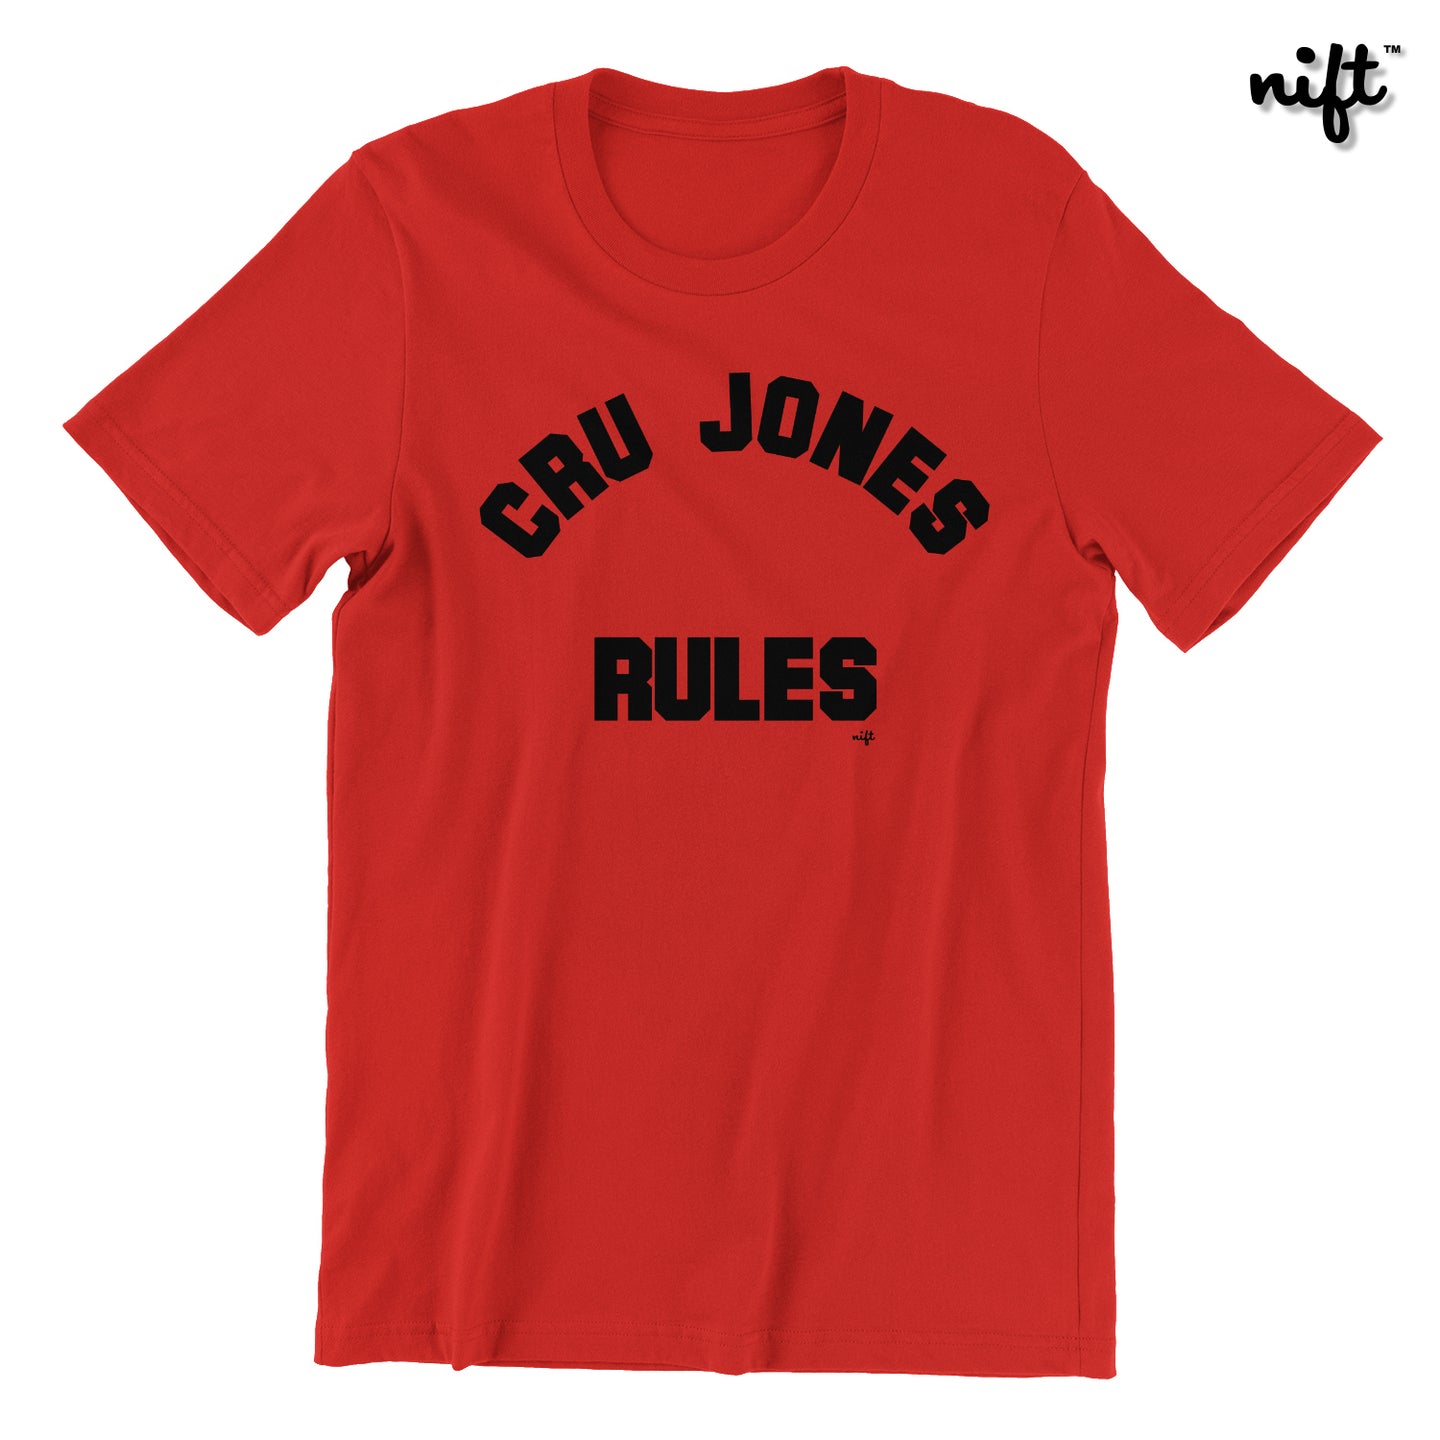 Cru Jones Rules T-shirt